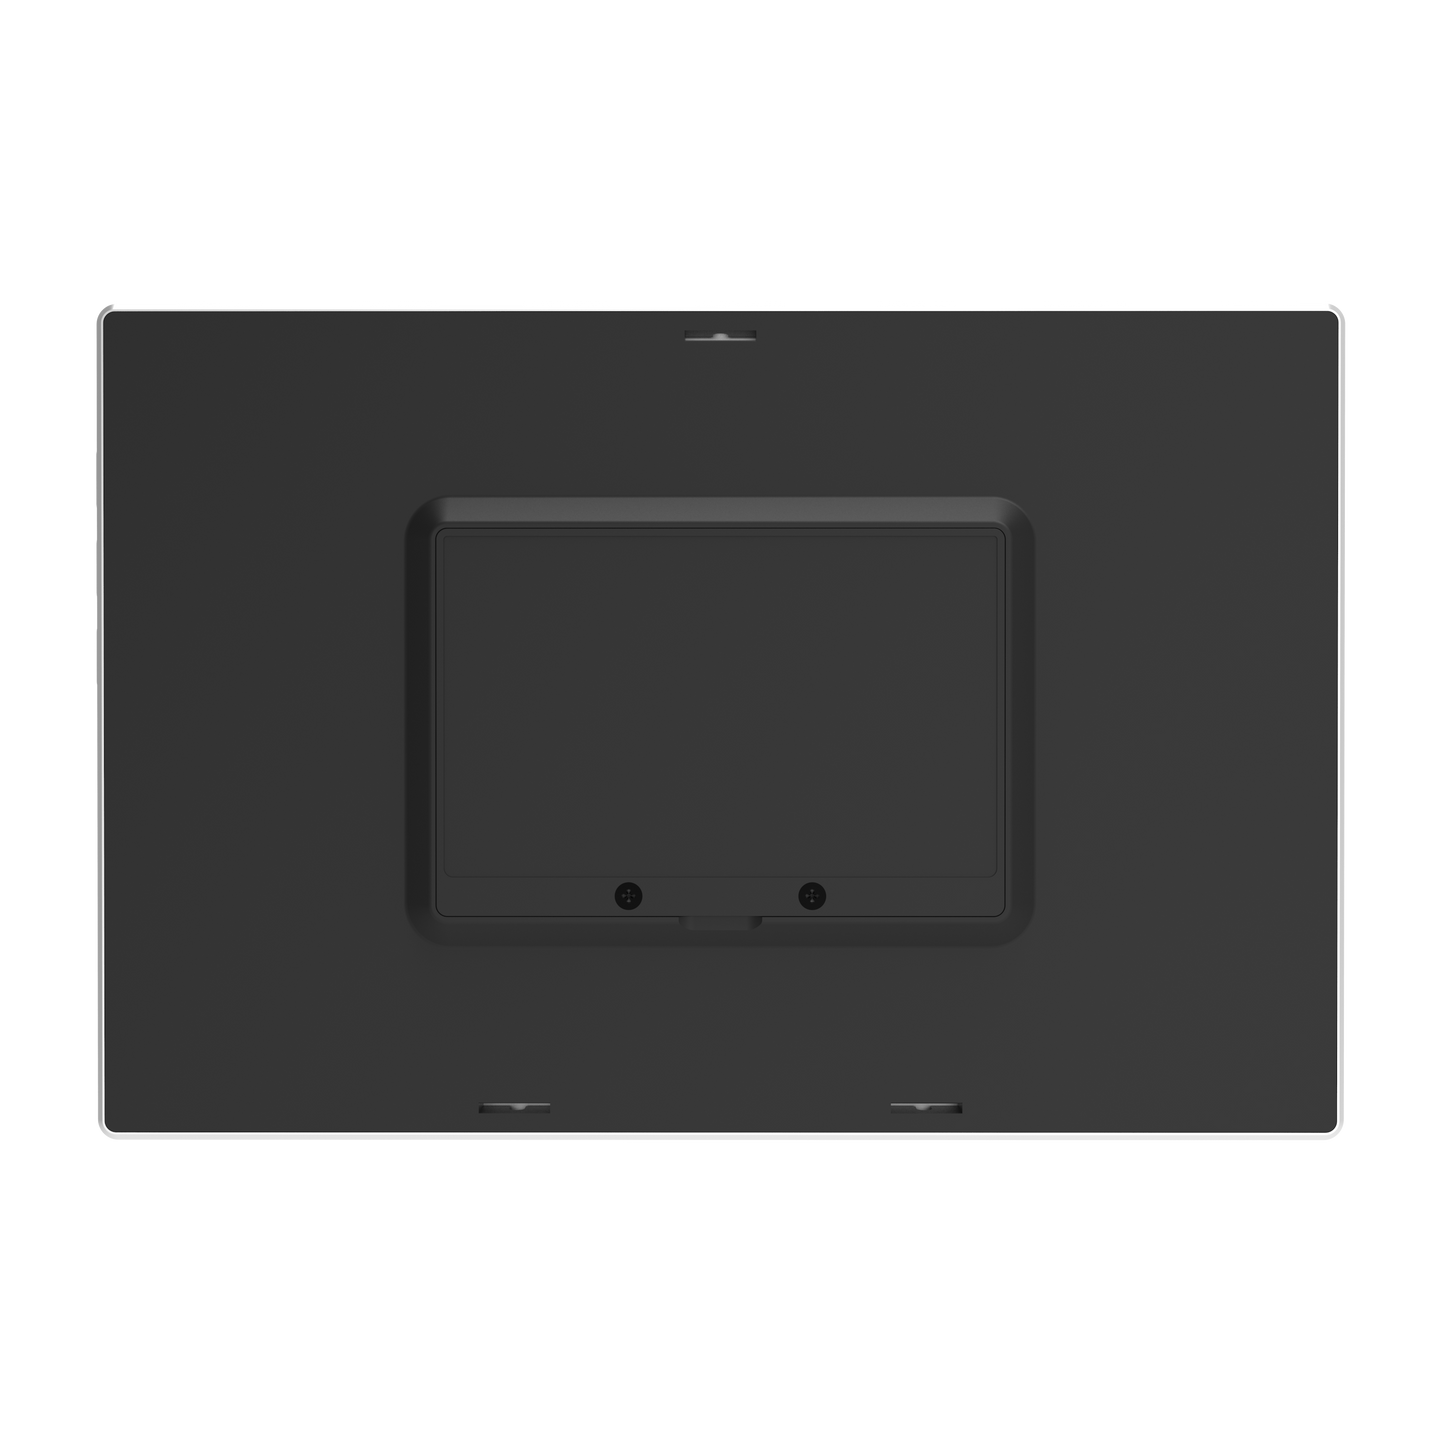 ePaper 7.5inch, 800x480 Resolution, Low Energy Display